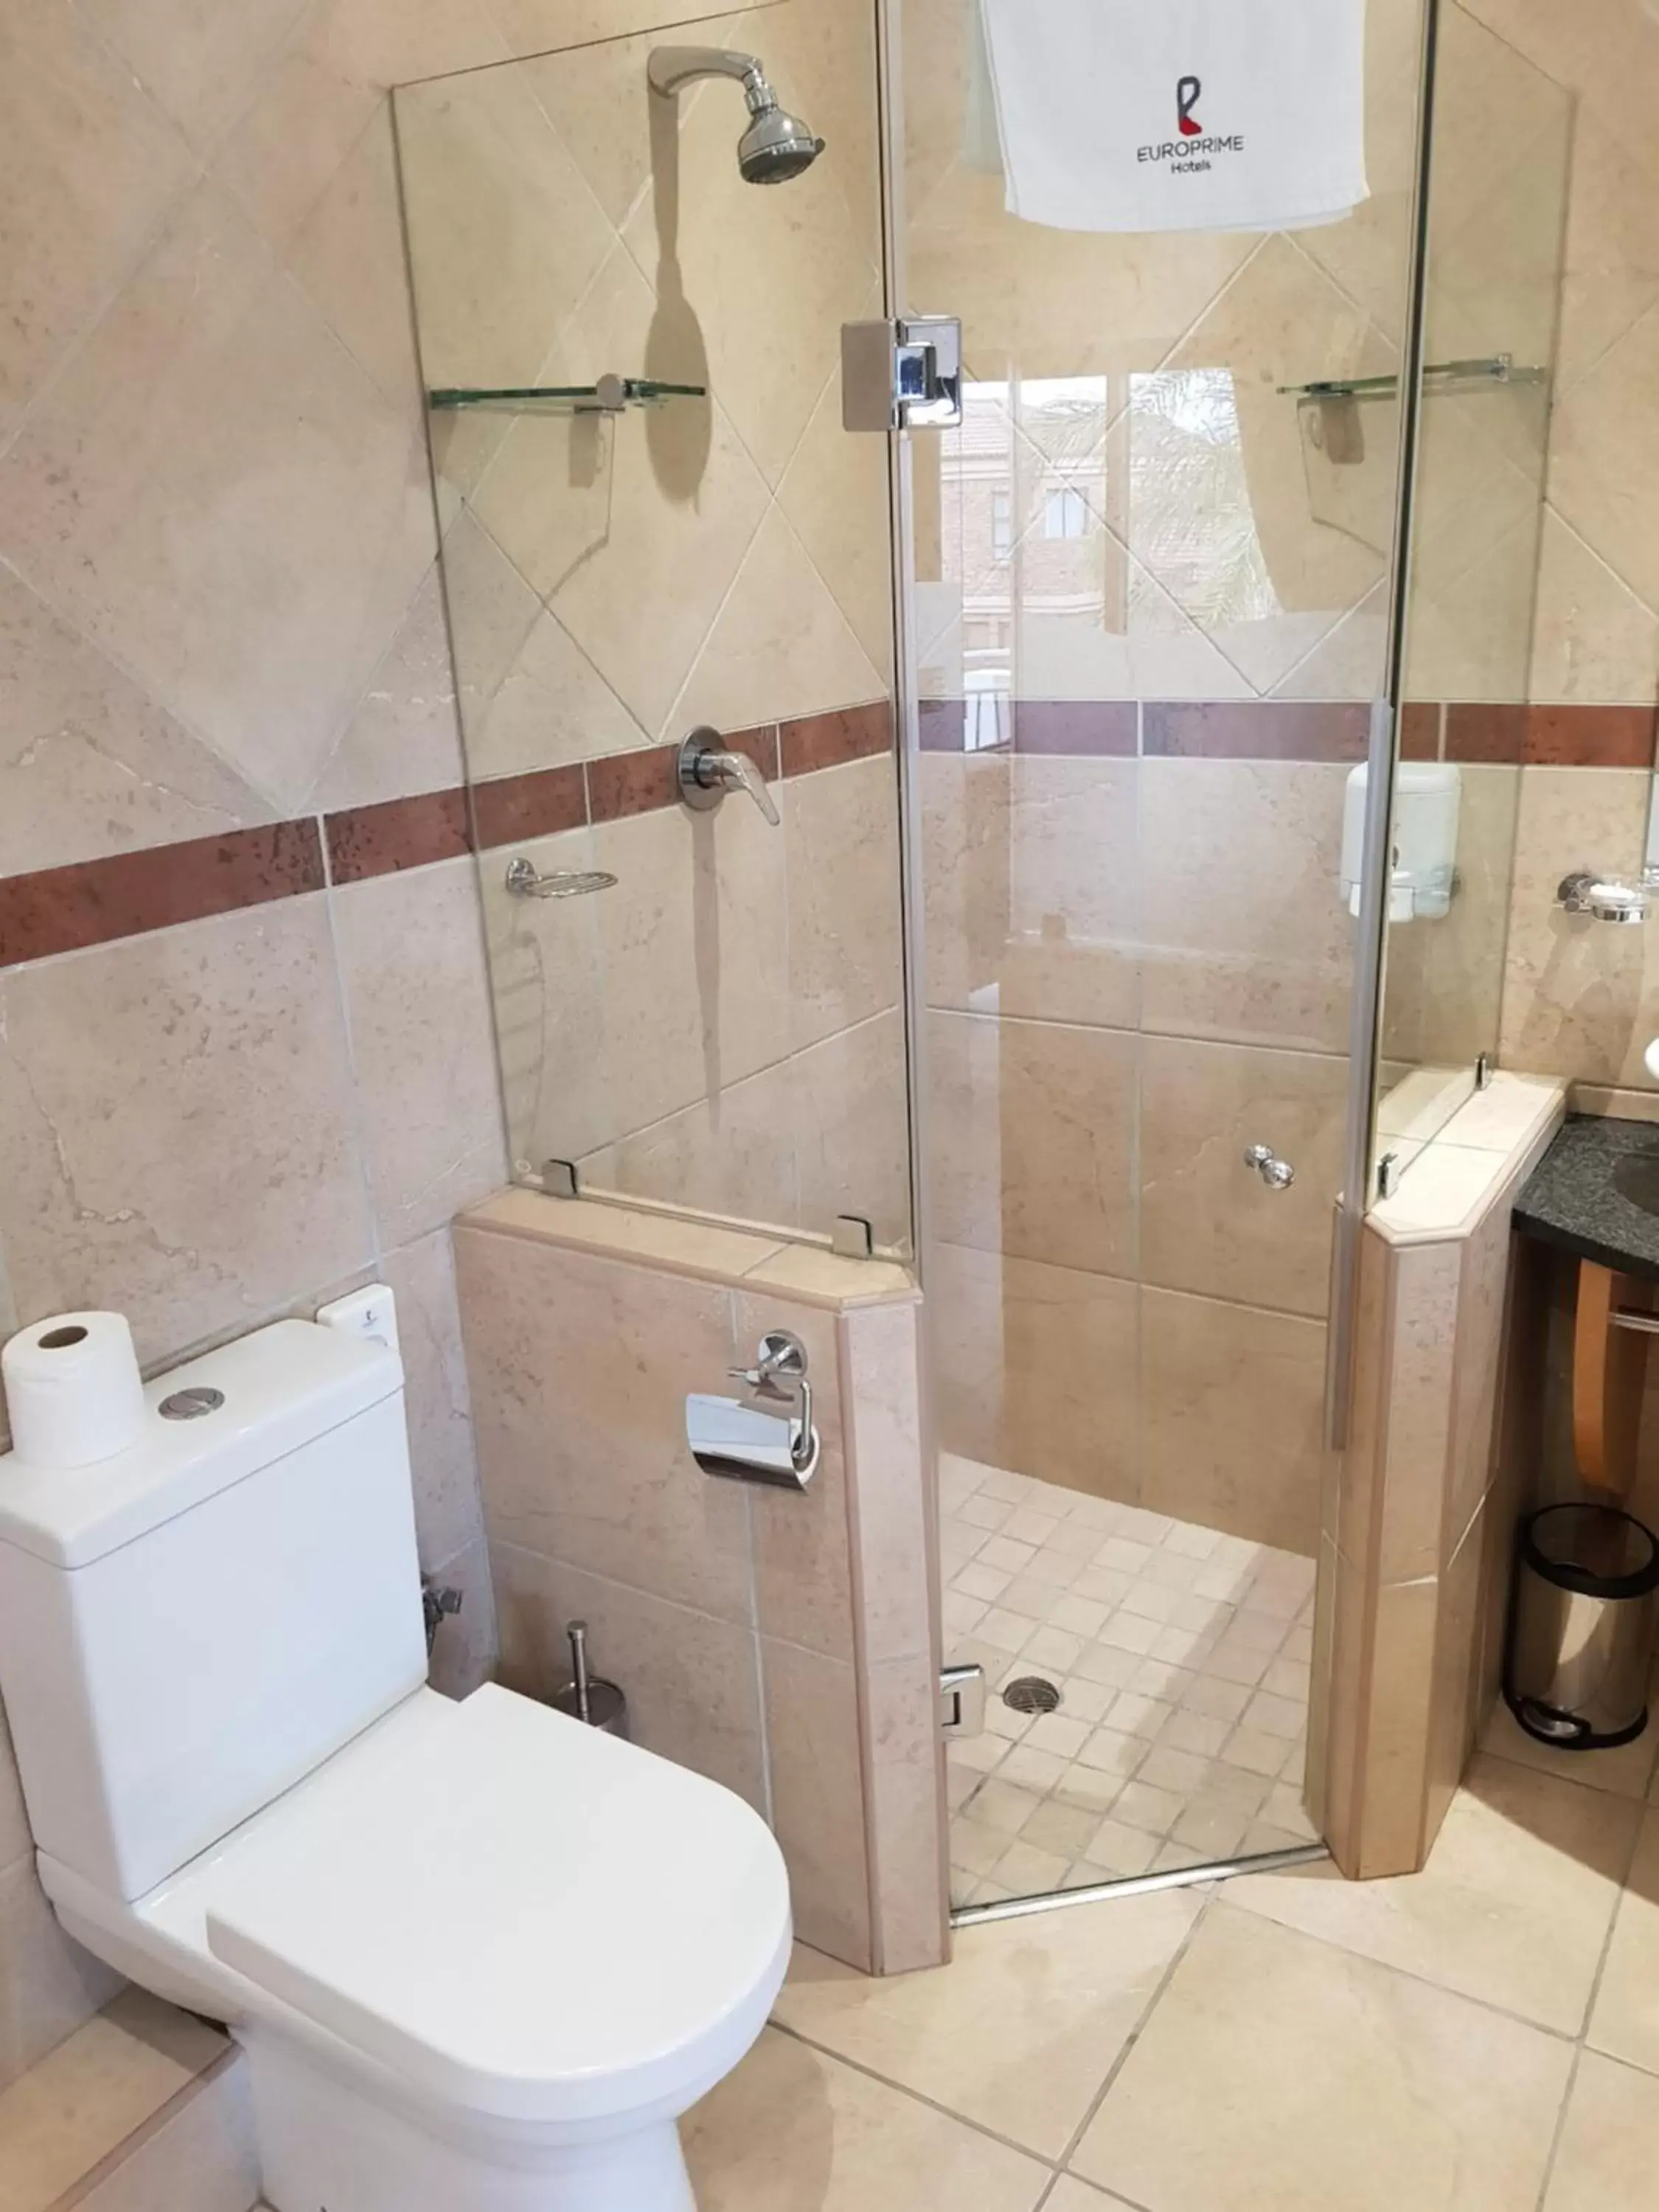 Shower, Bathroom in Europrime Hotel